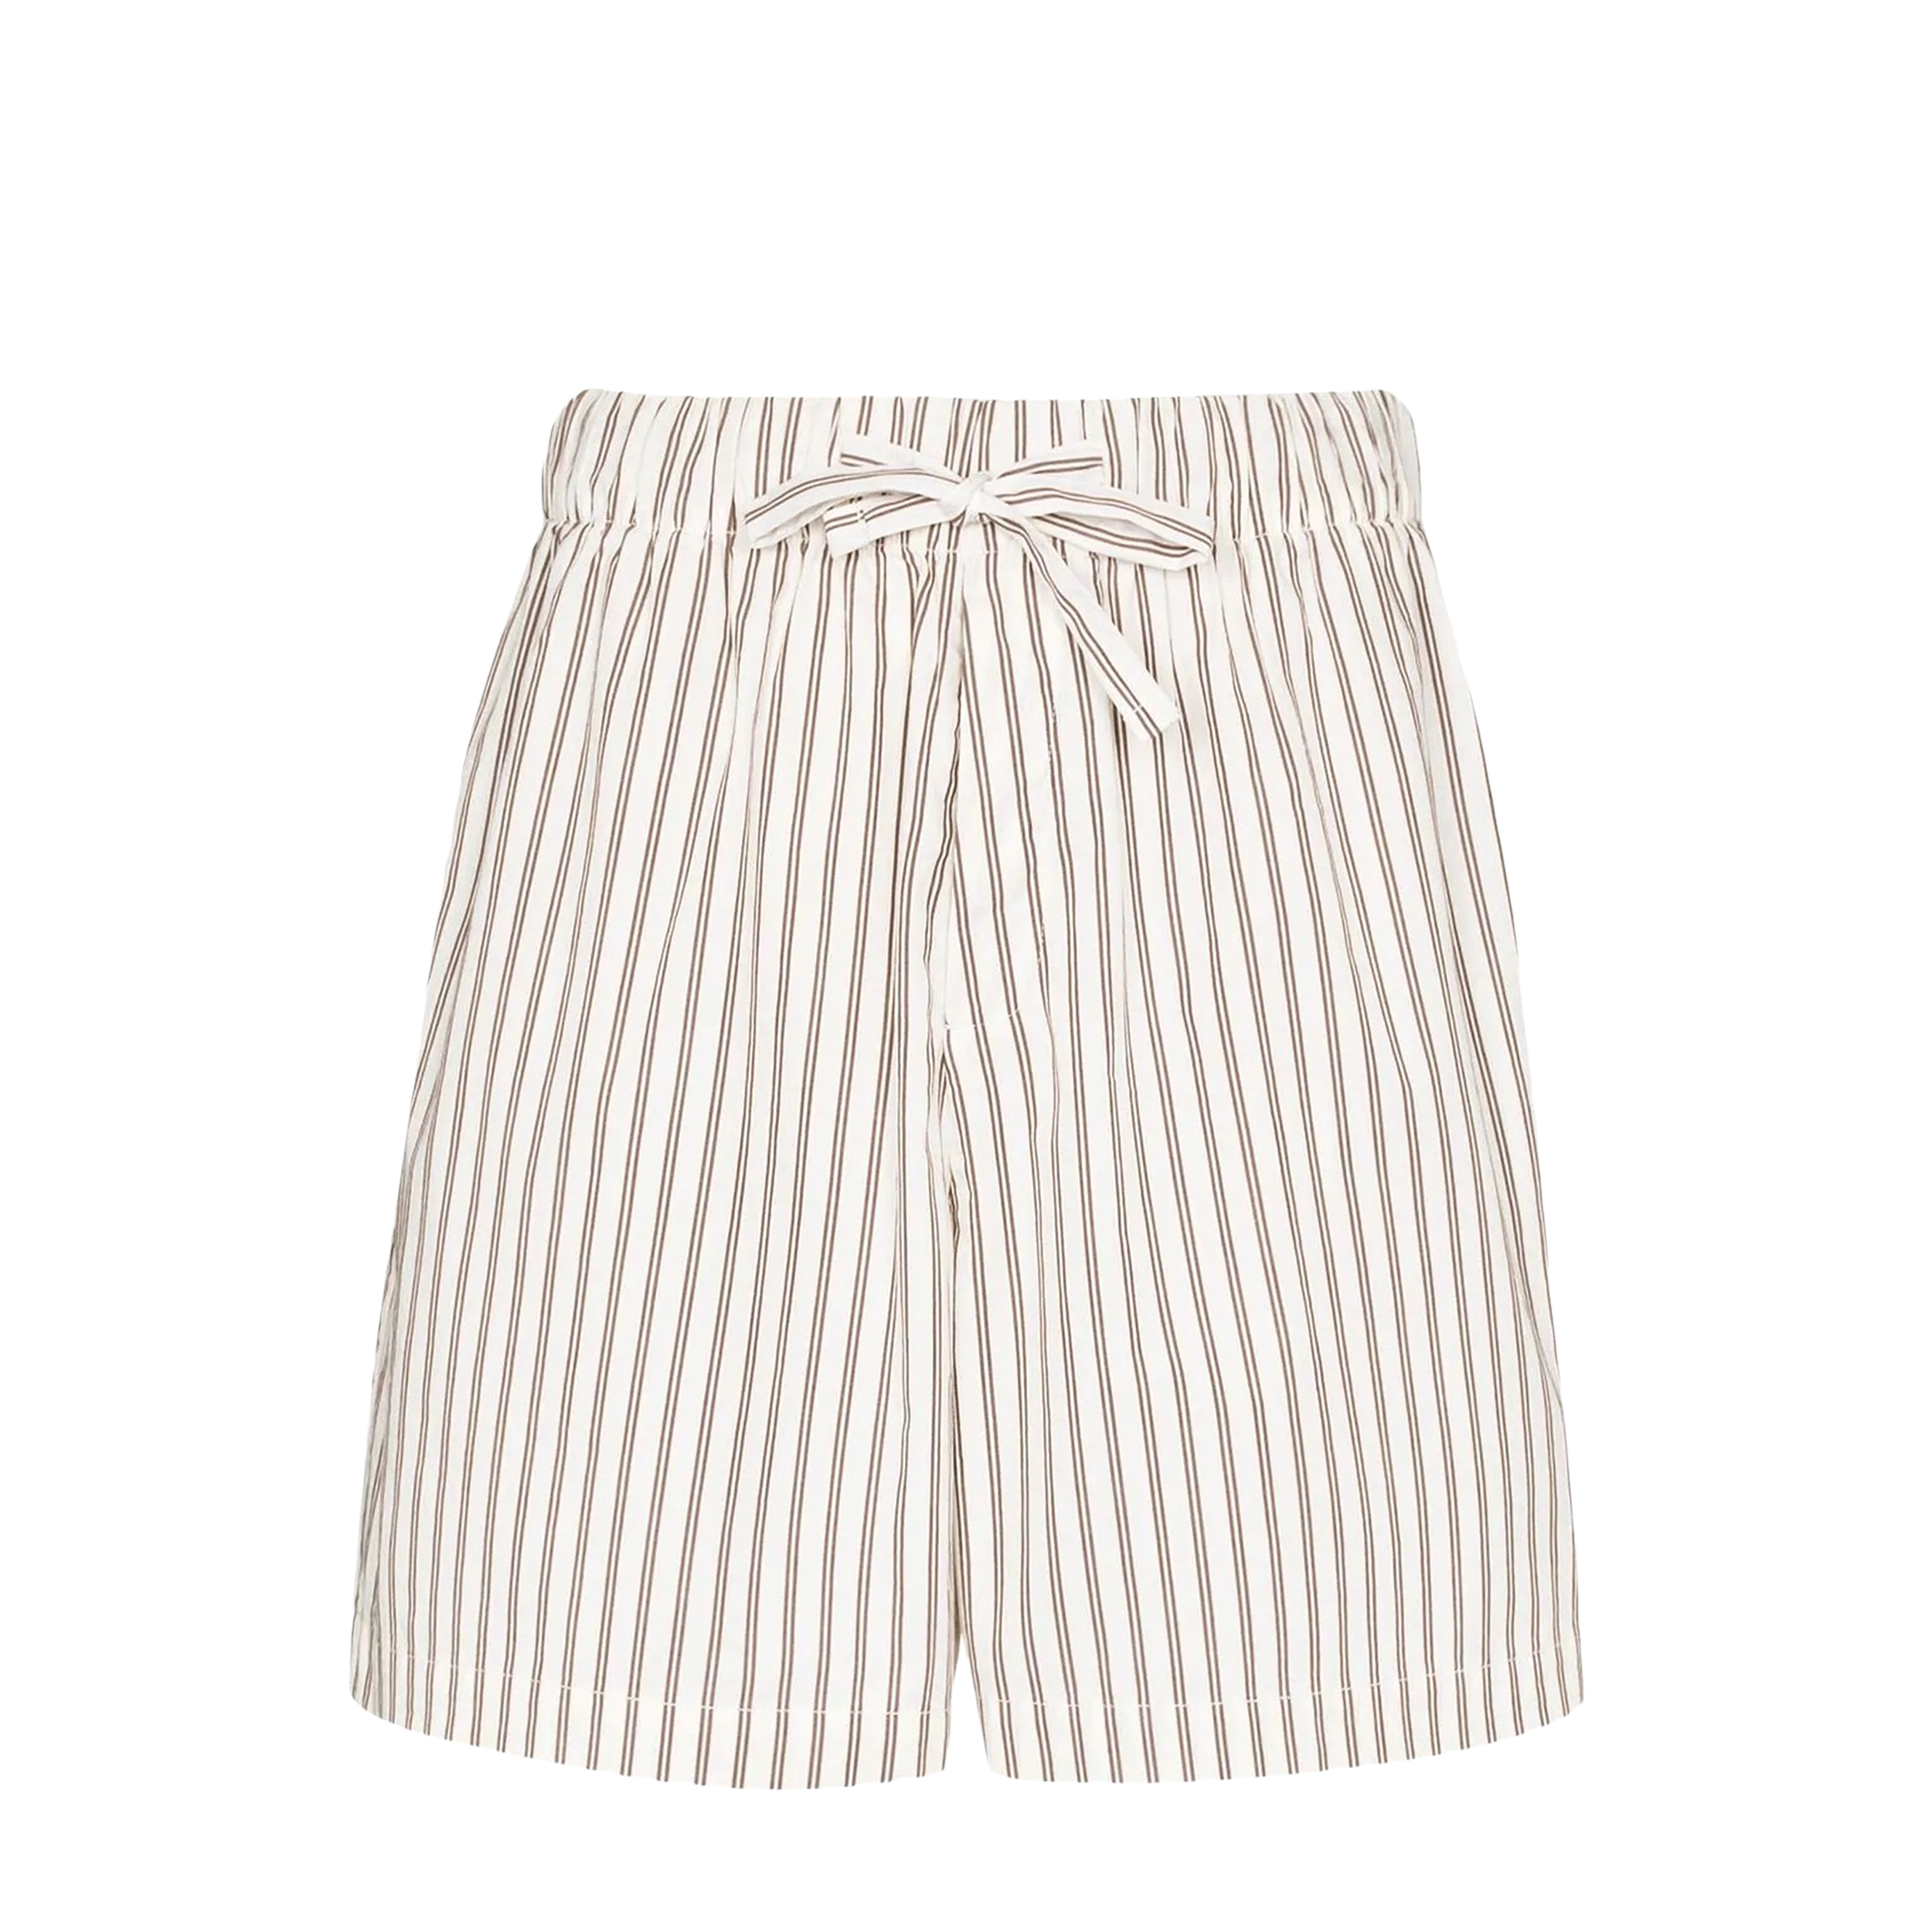 Tekla Tekla Poplin Pyjamas Shorts White & Brown Striped (S)